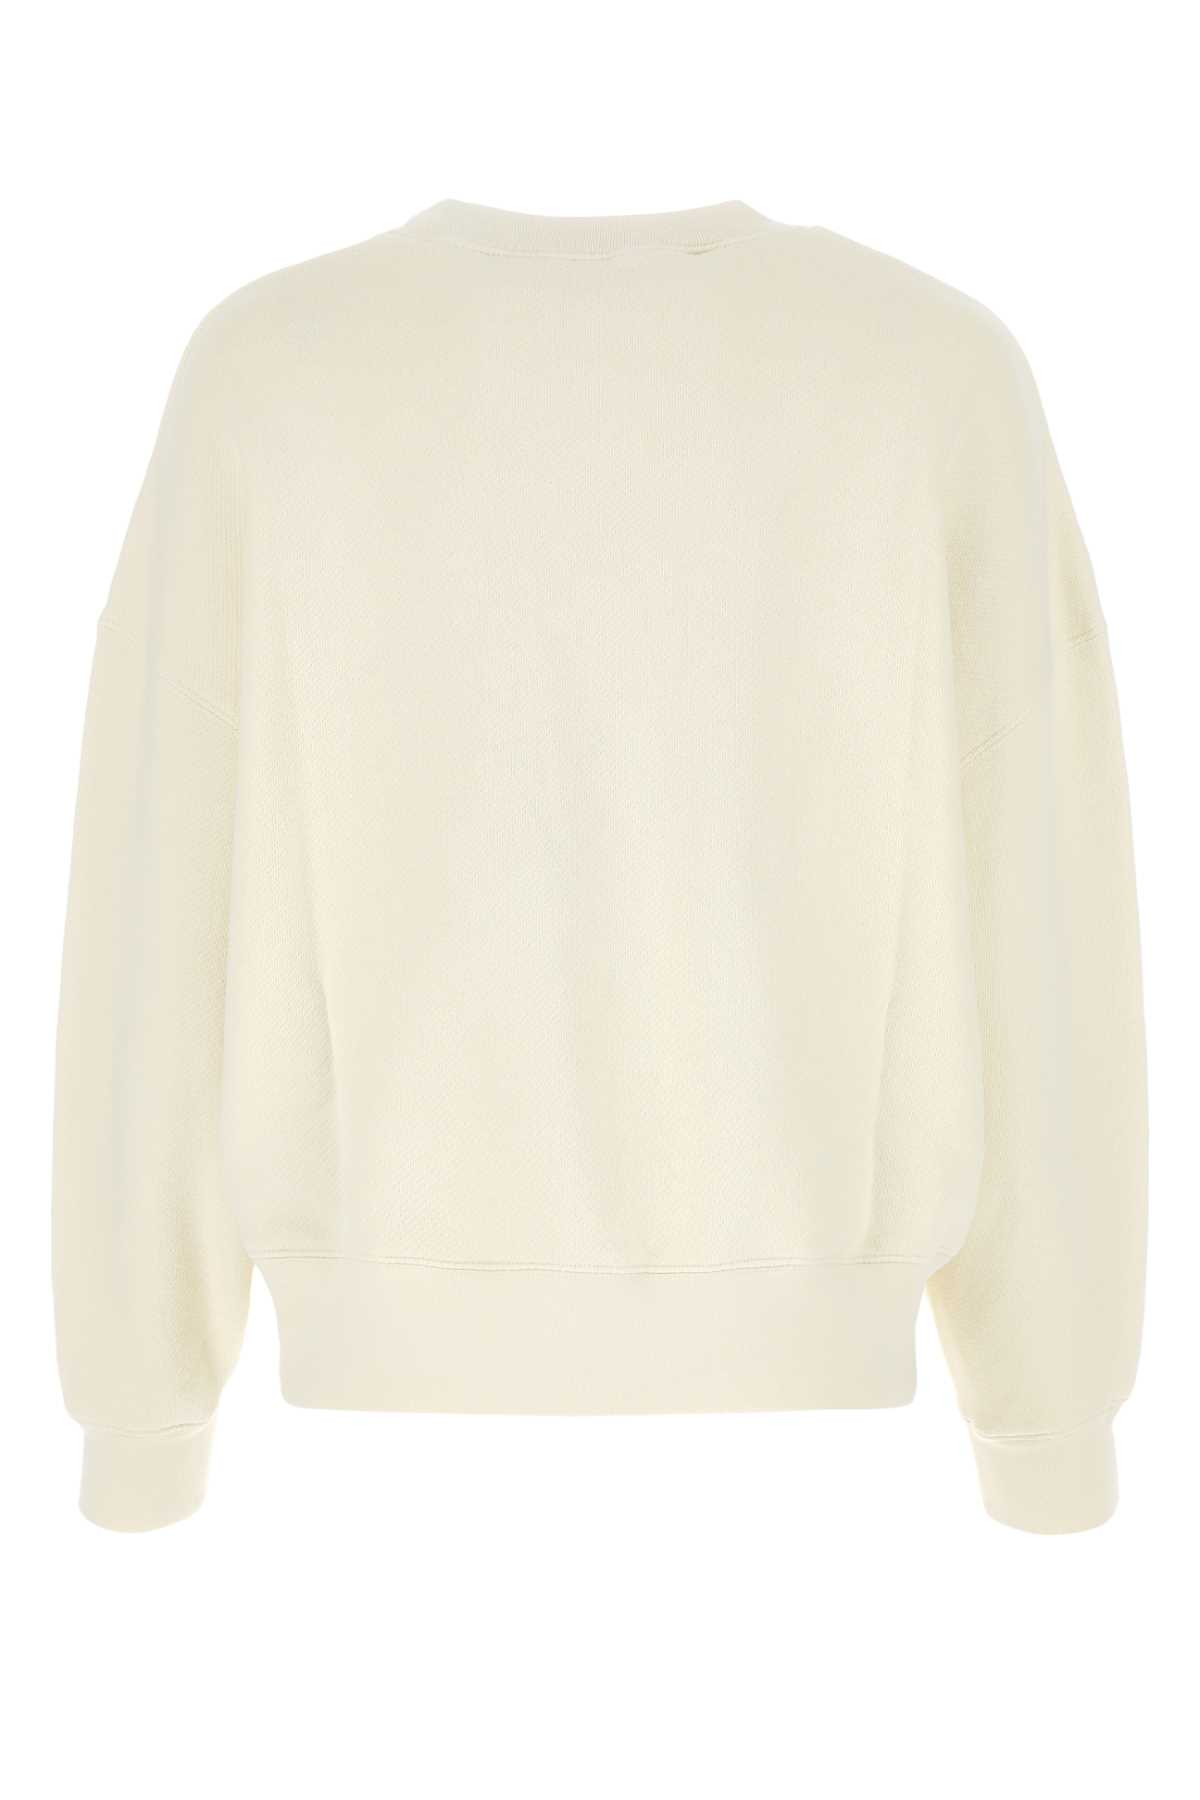 Shop Palm Angels Sand Cotton Oversize Sweatshirtâ In Butterblack